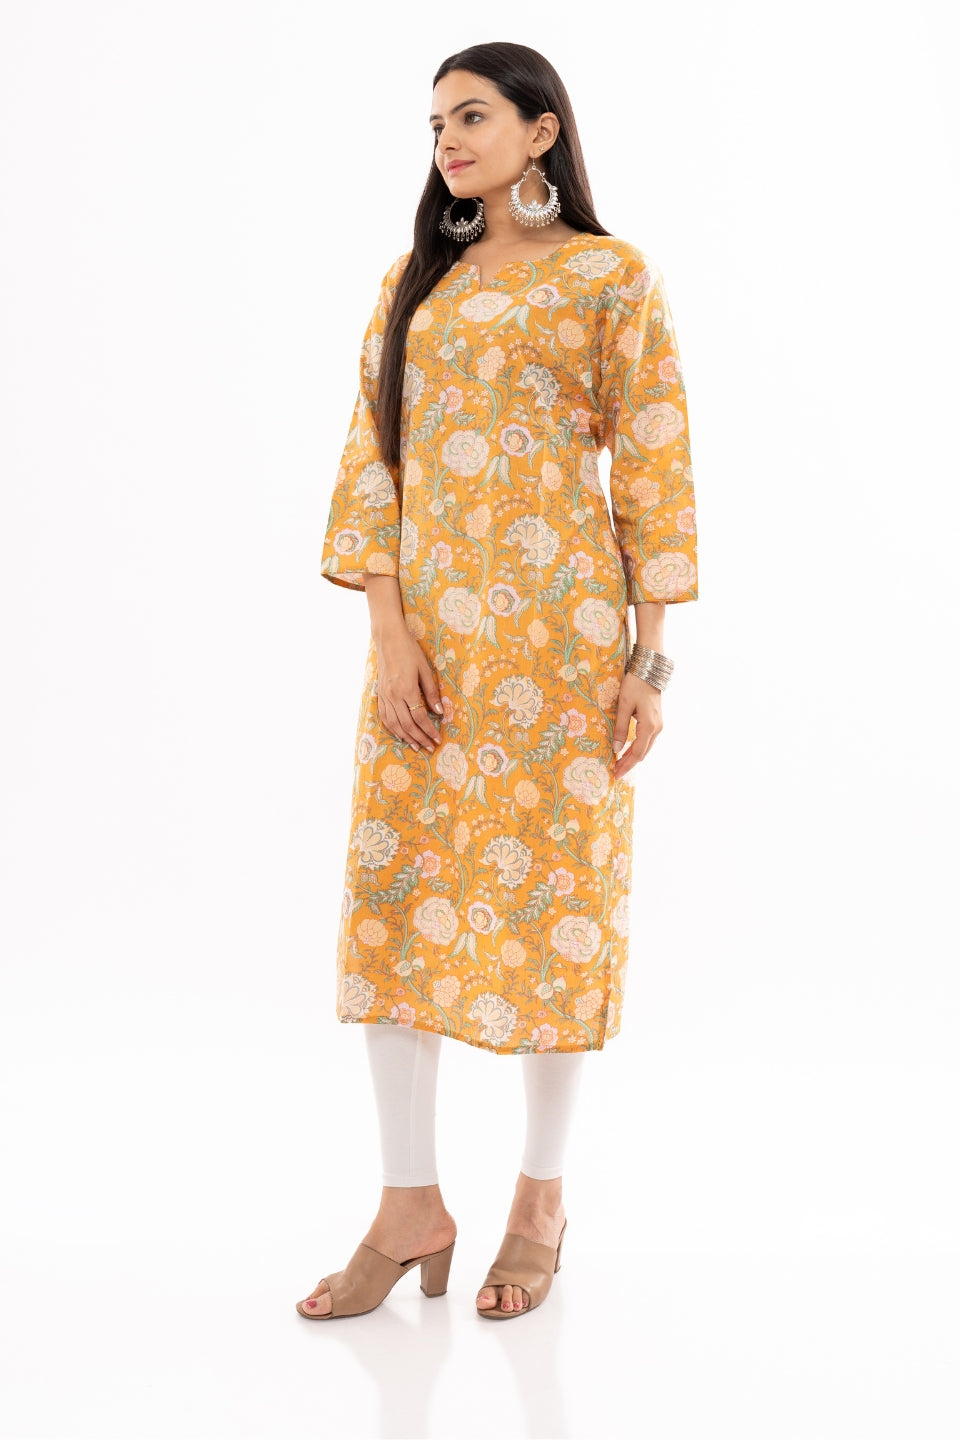 Ekisha women's cotton yellow printed straight floral kurta kurti round neck, side view